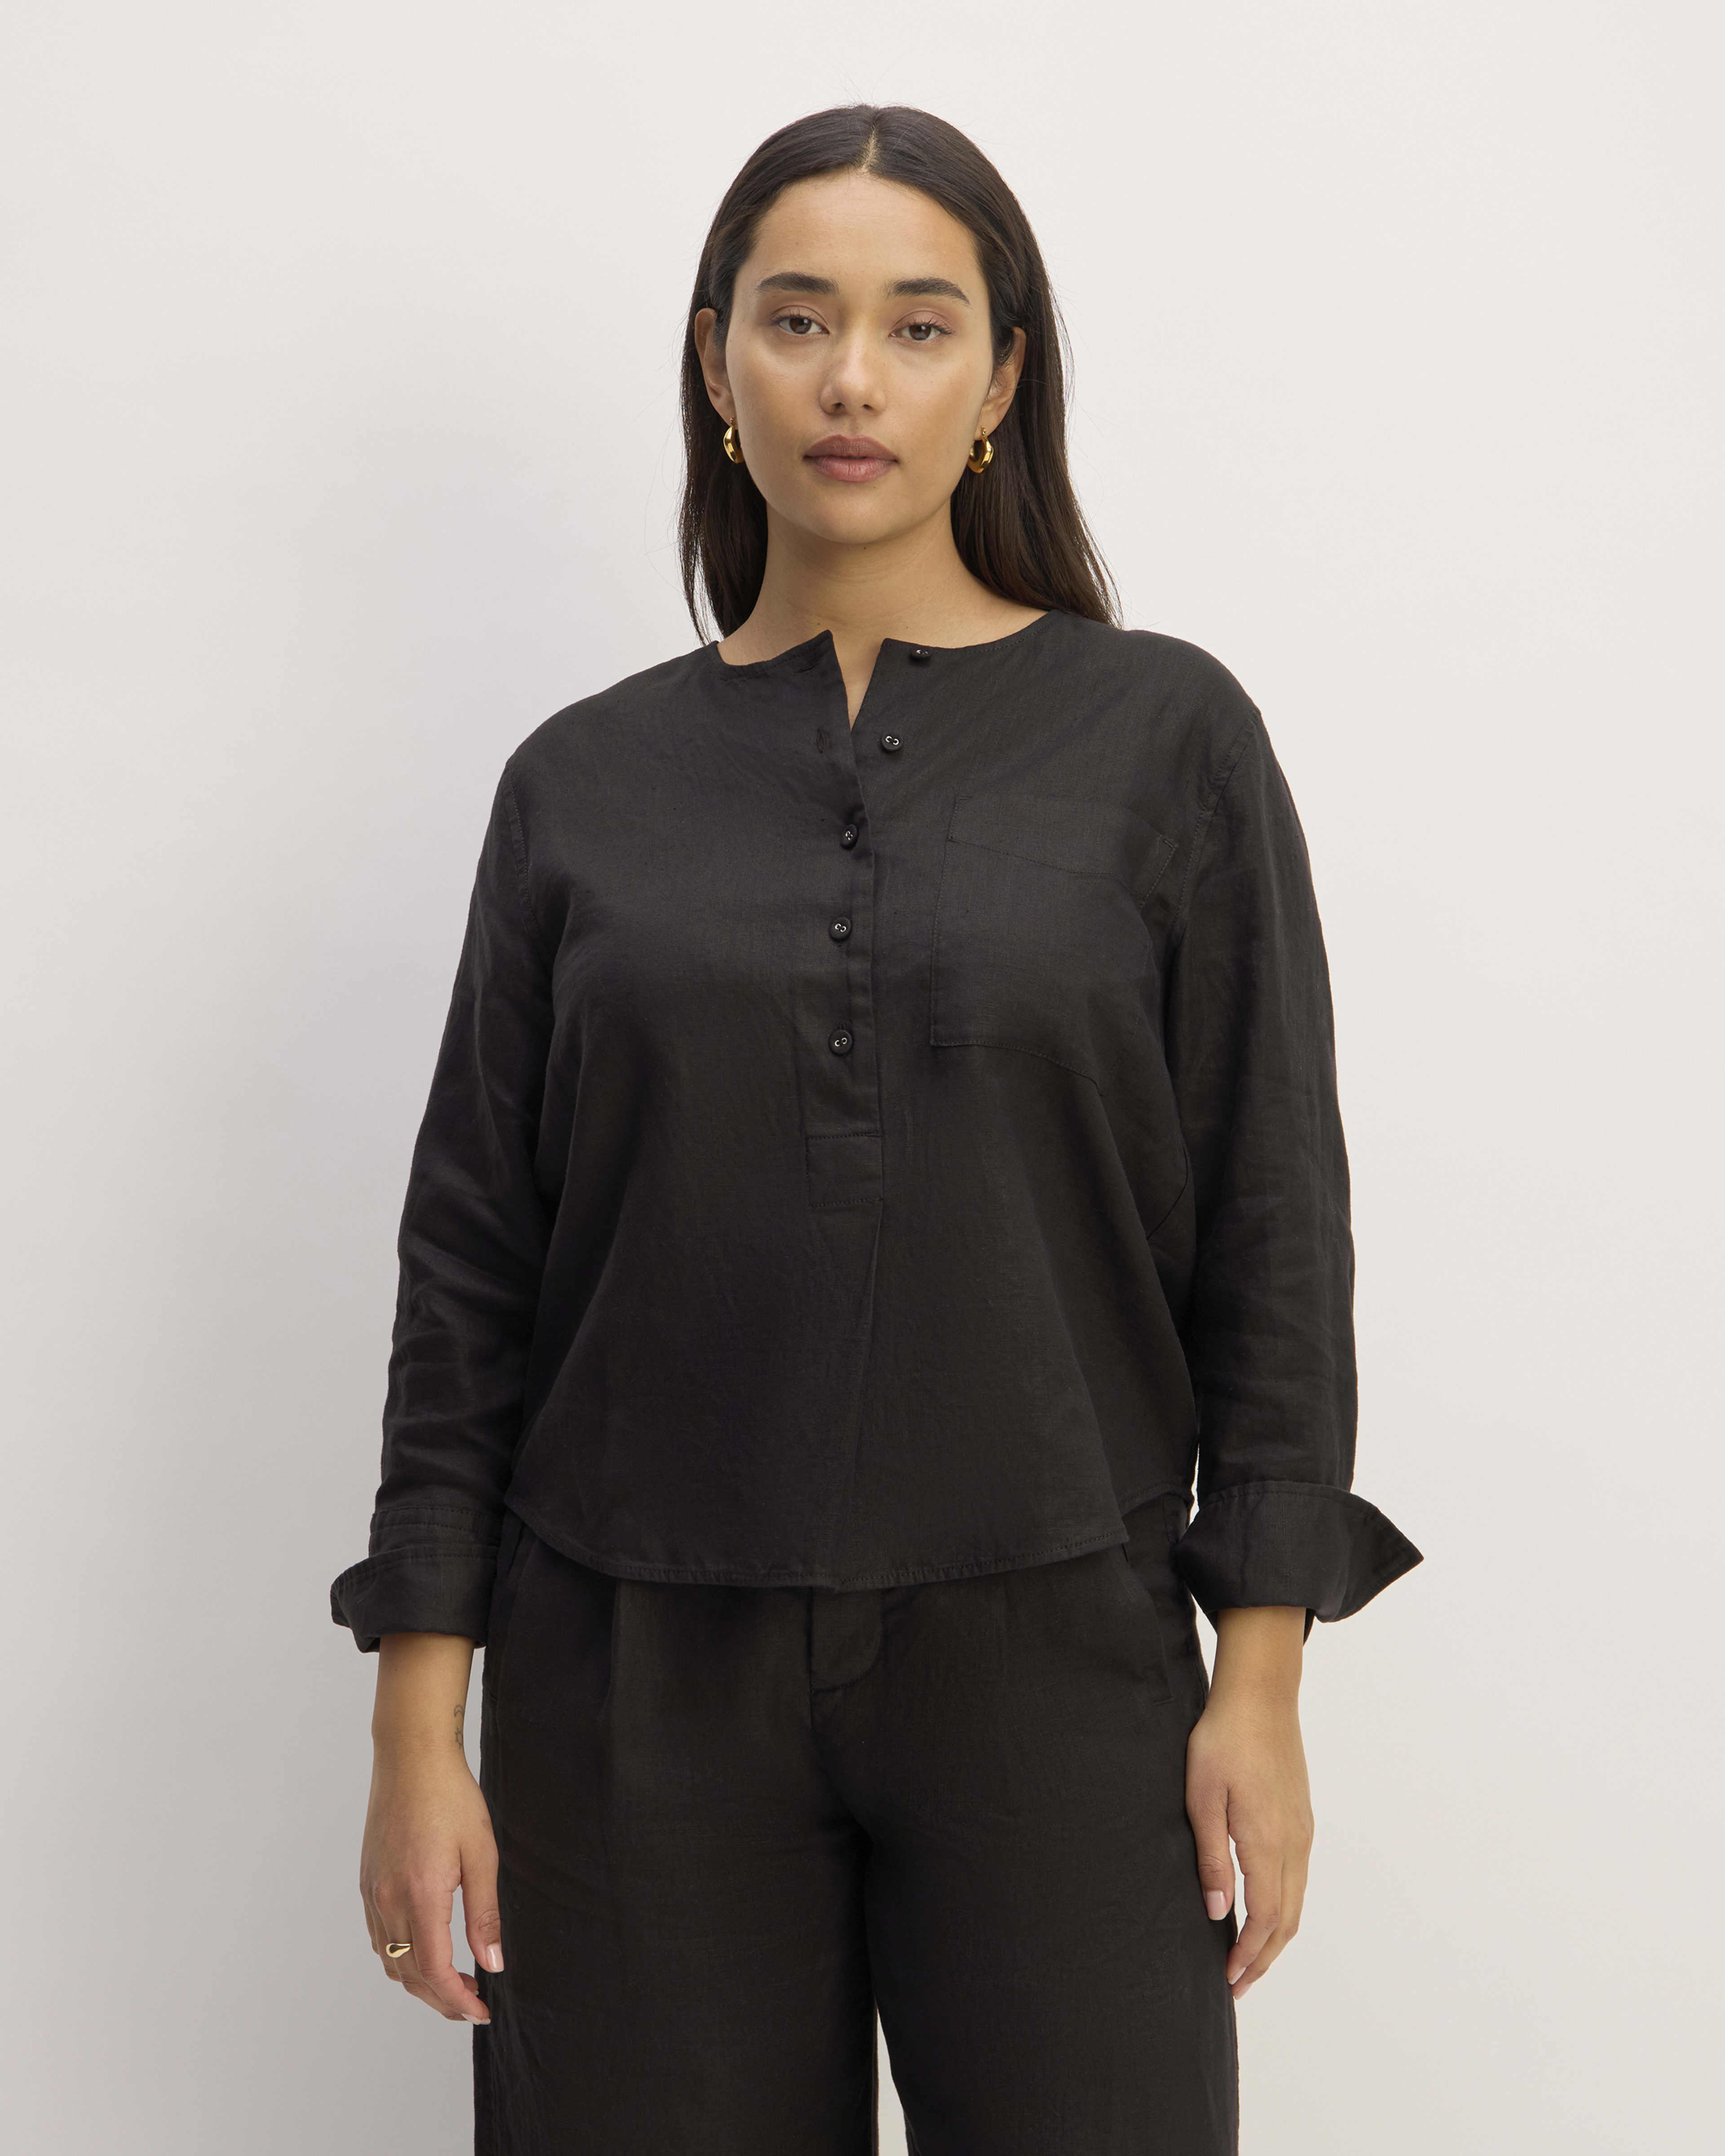 Brilliant Basics Women's Long Sleeve Shirt - Black